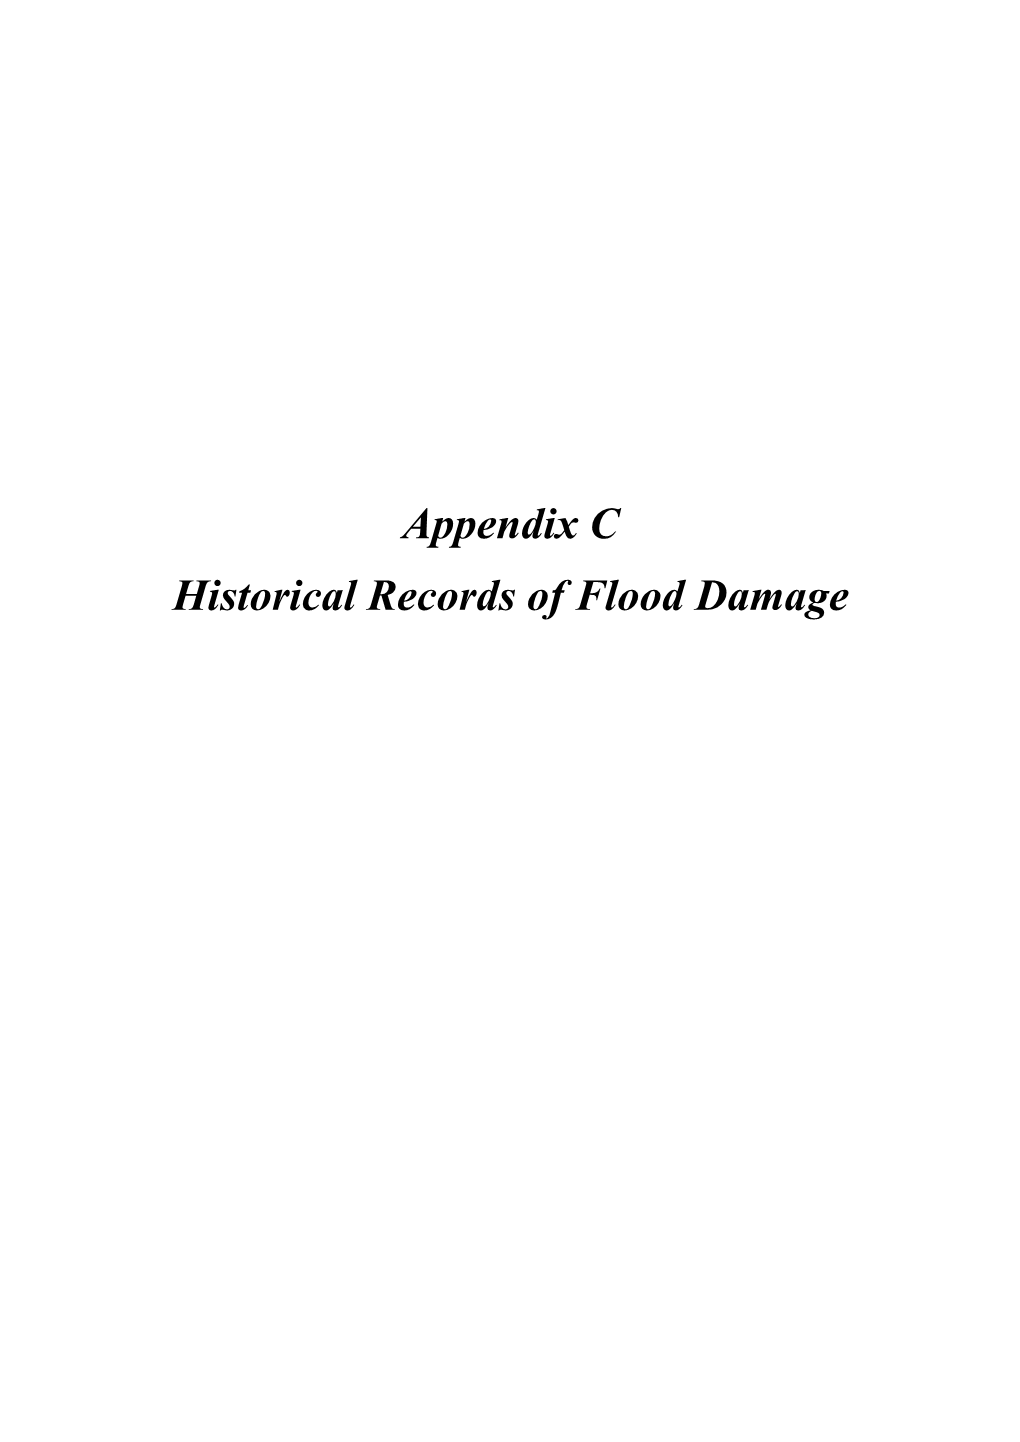 Appendix C Historical Records of Flood Damage